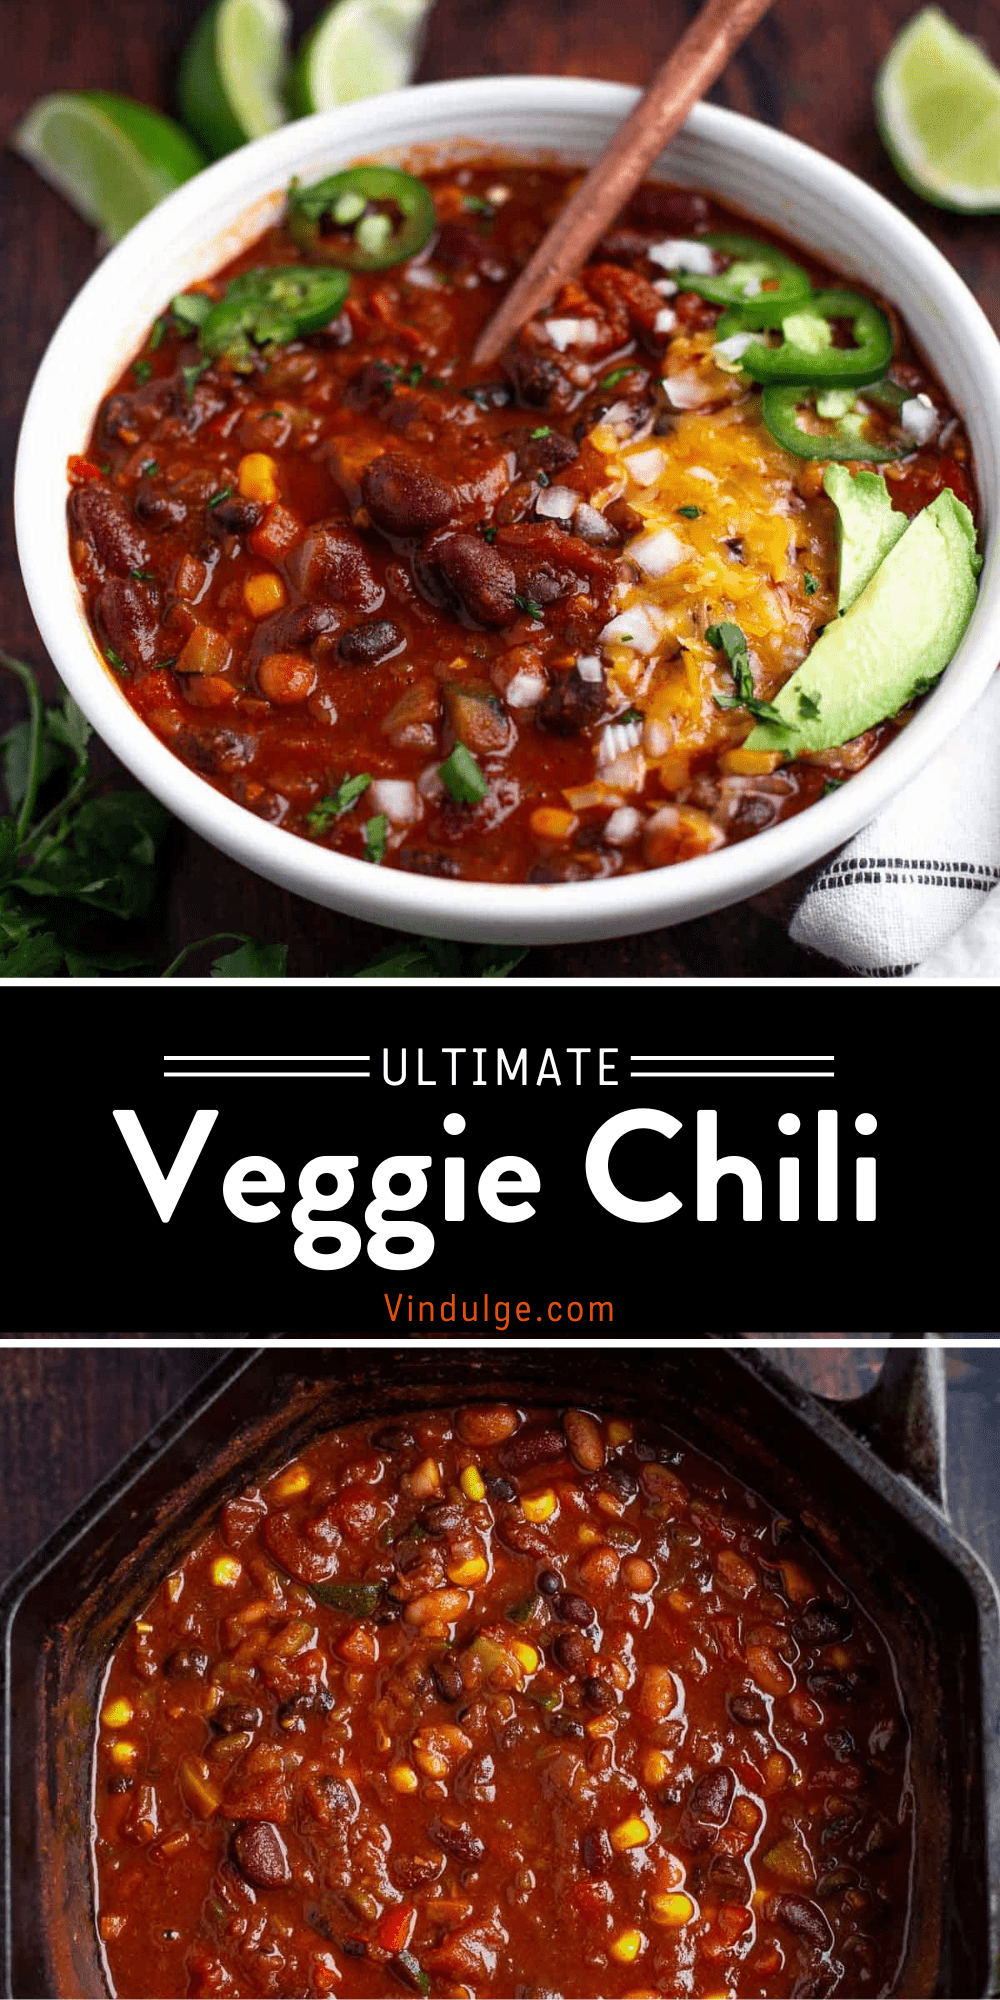 The Ultimate Vegetarian Chili Recipe - Vindulge